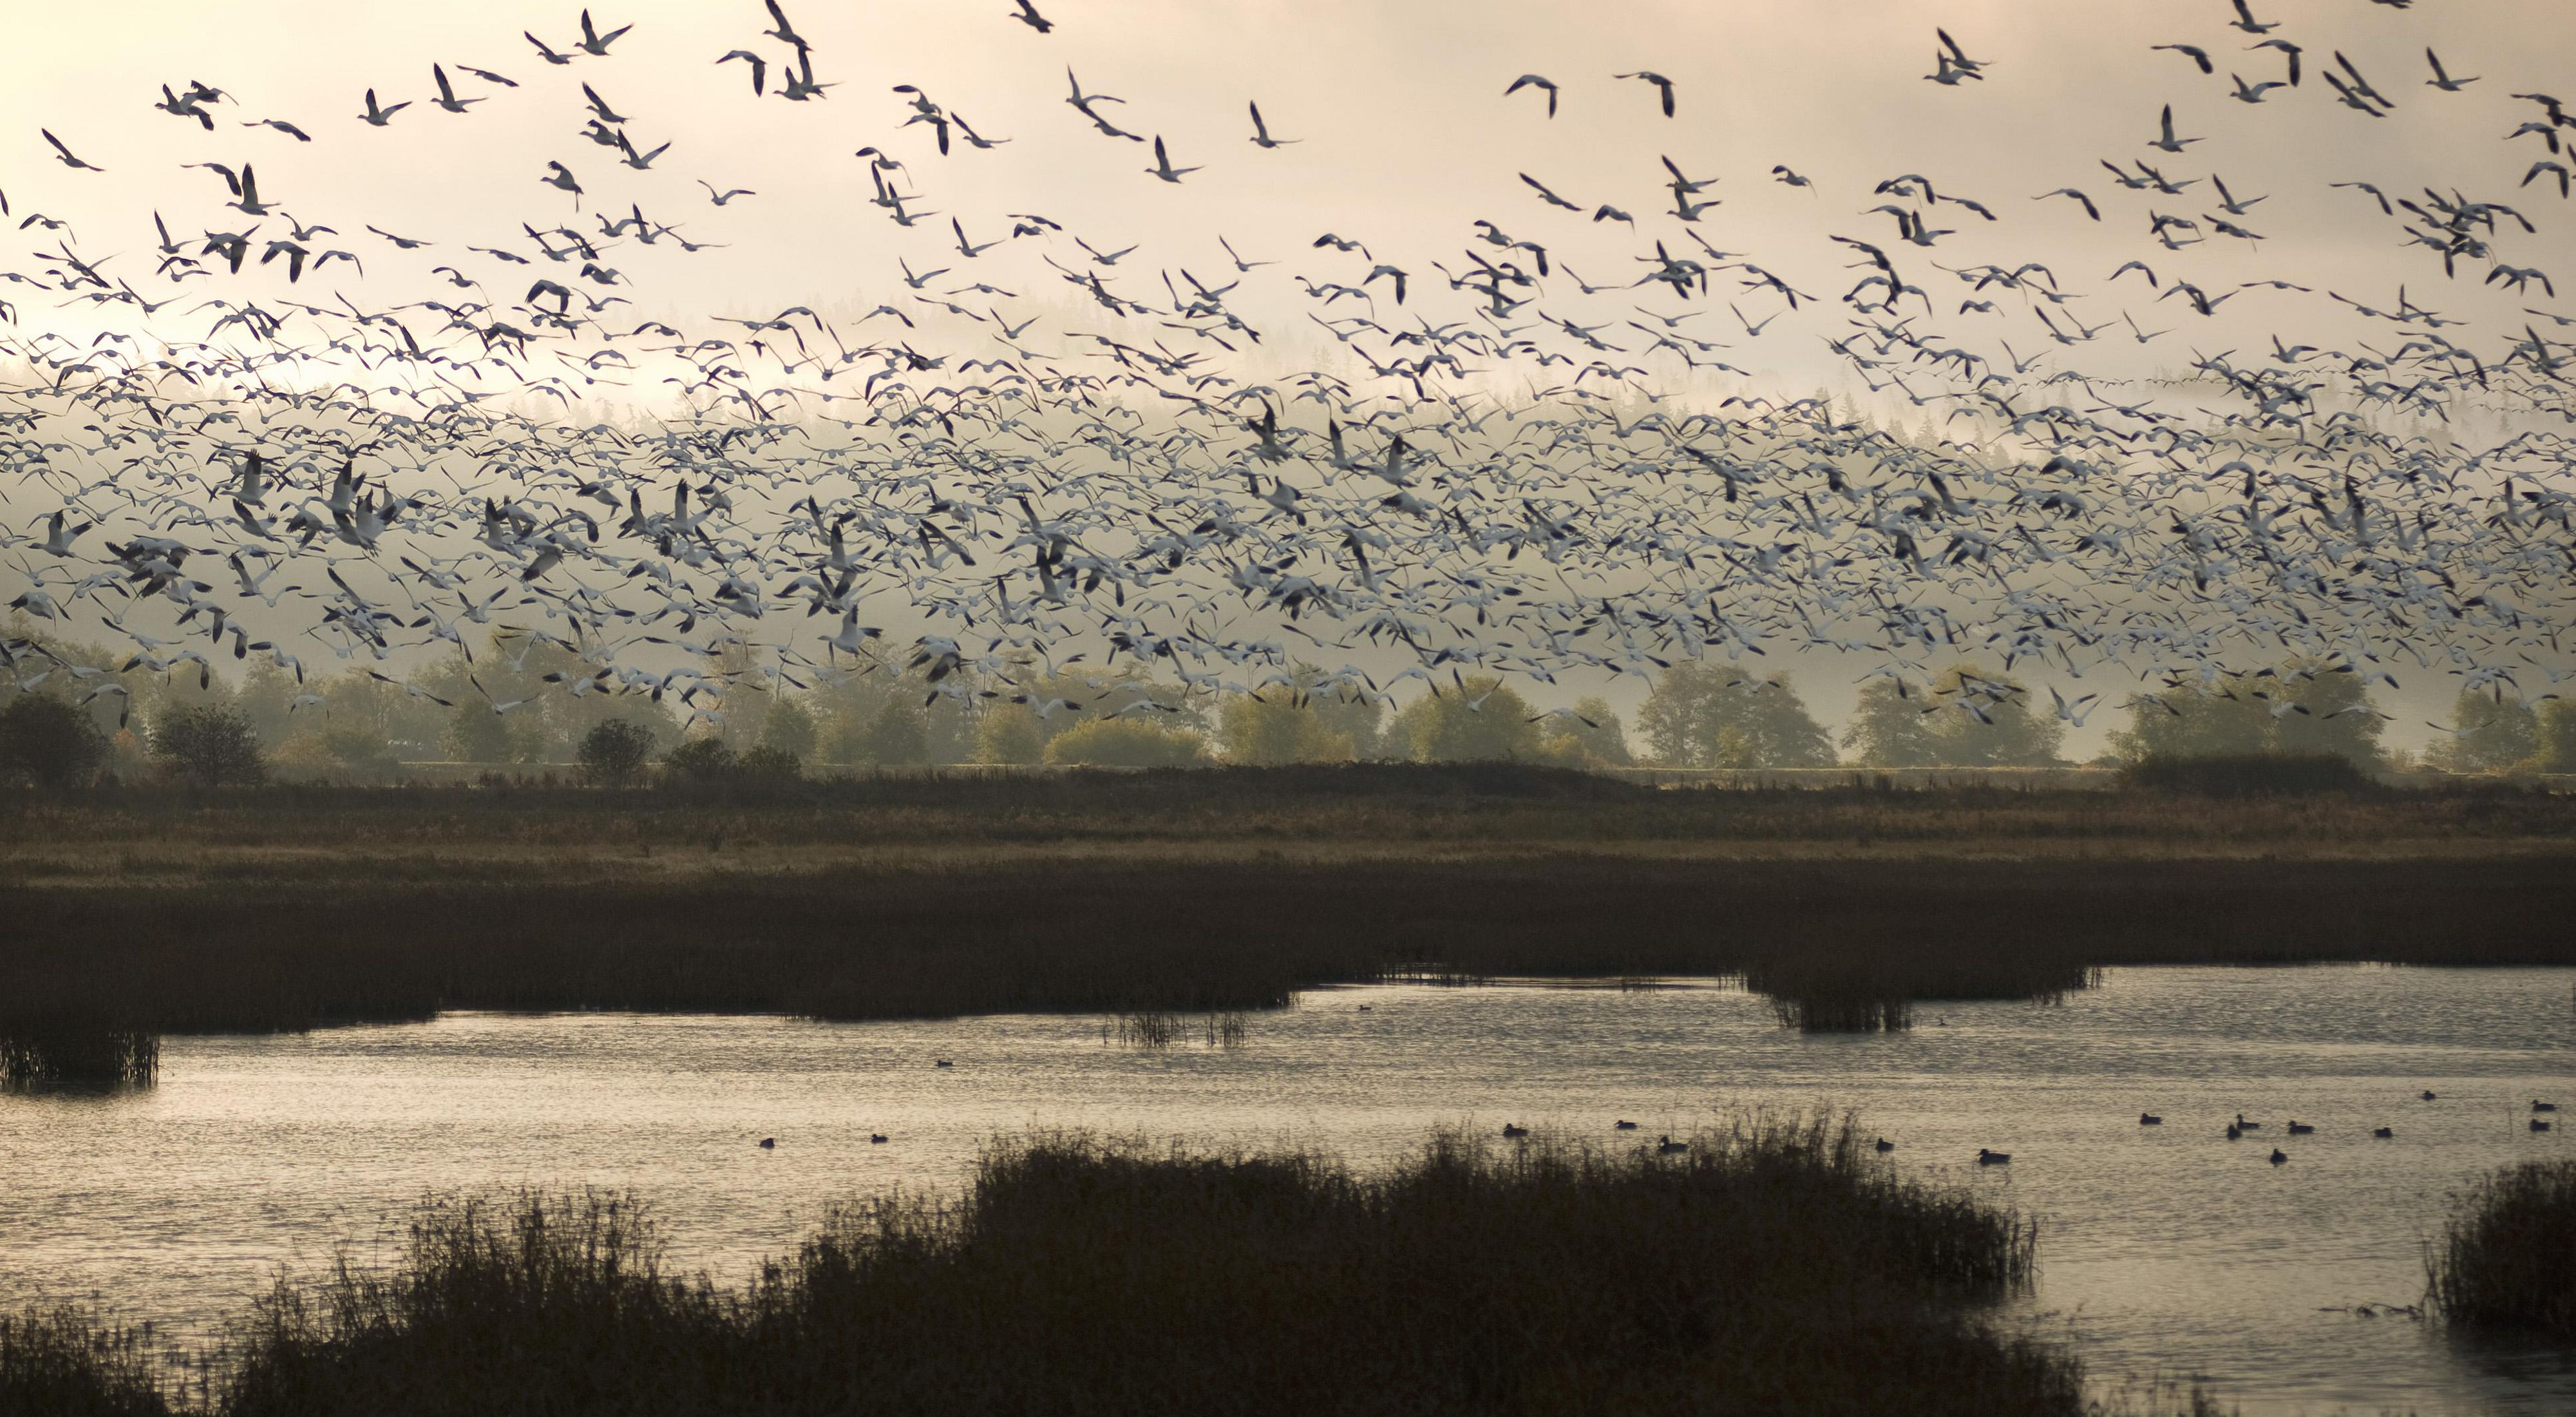 Hundreds of birds take flight over a foggy marsh in Washington